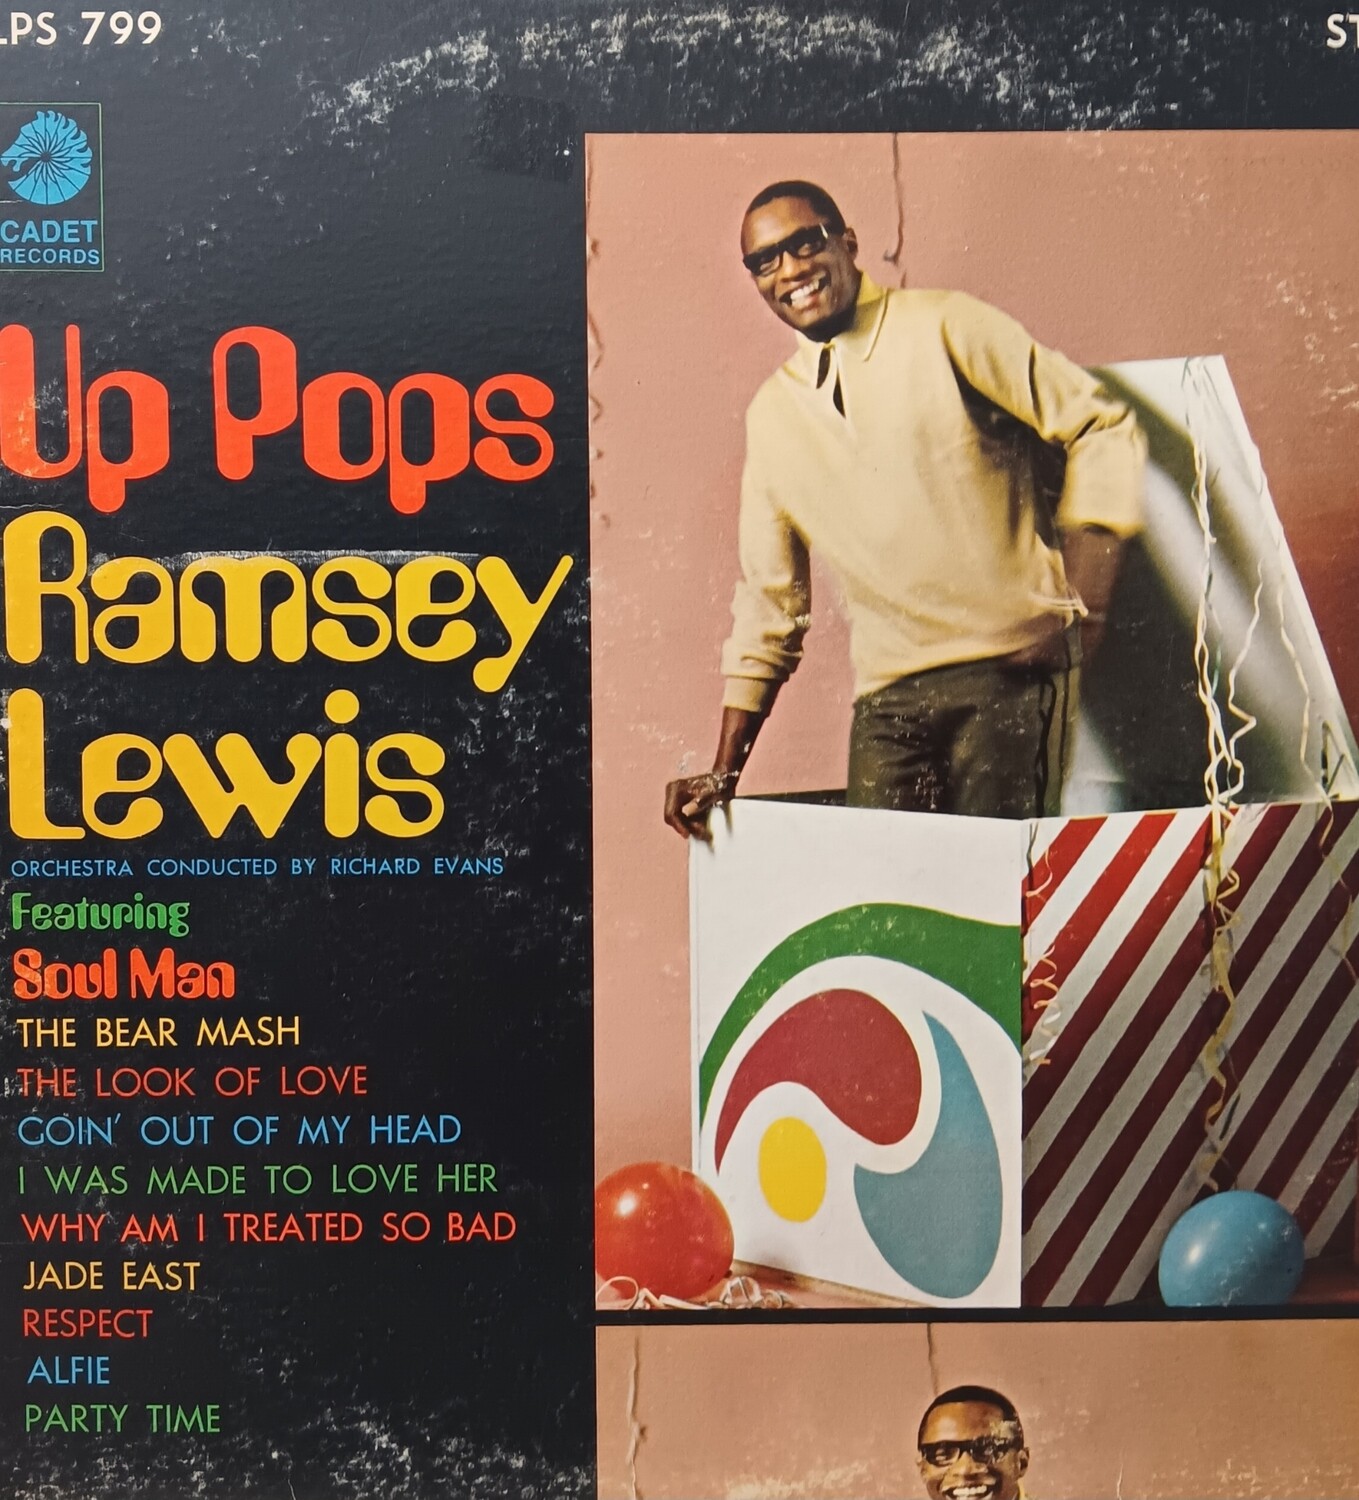 RAMSEY LEWIS - Up pops